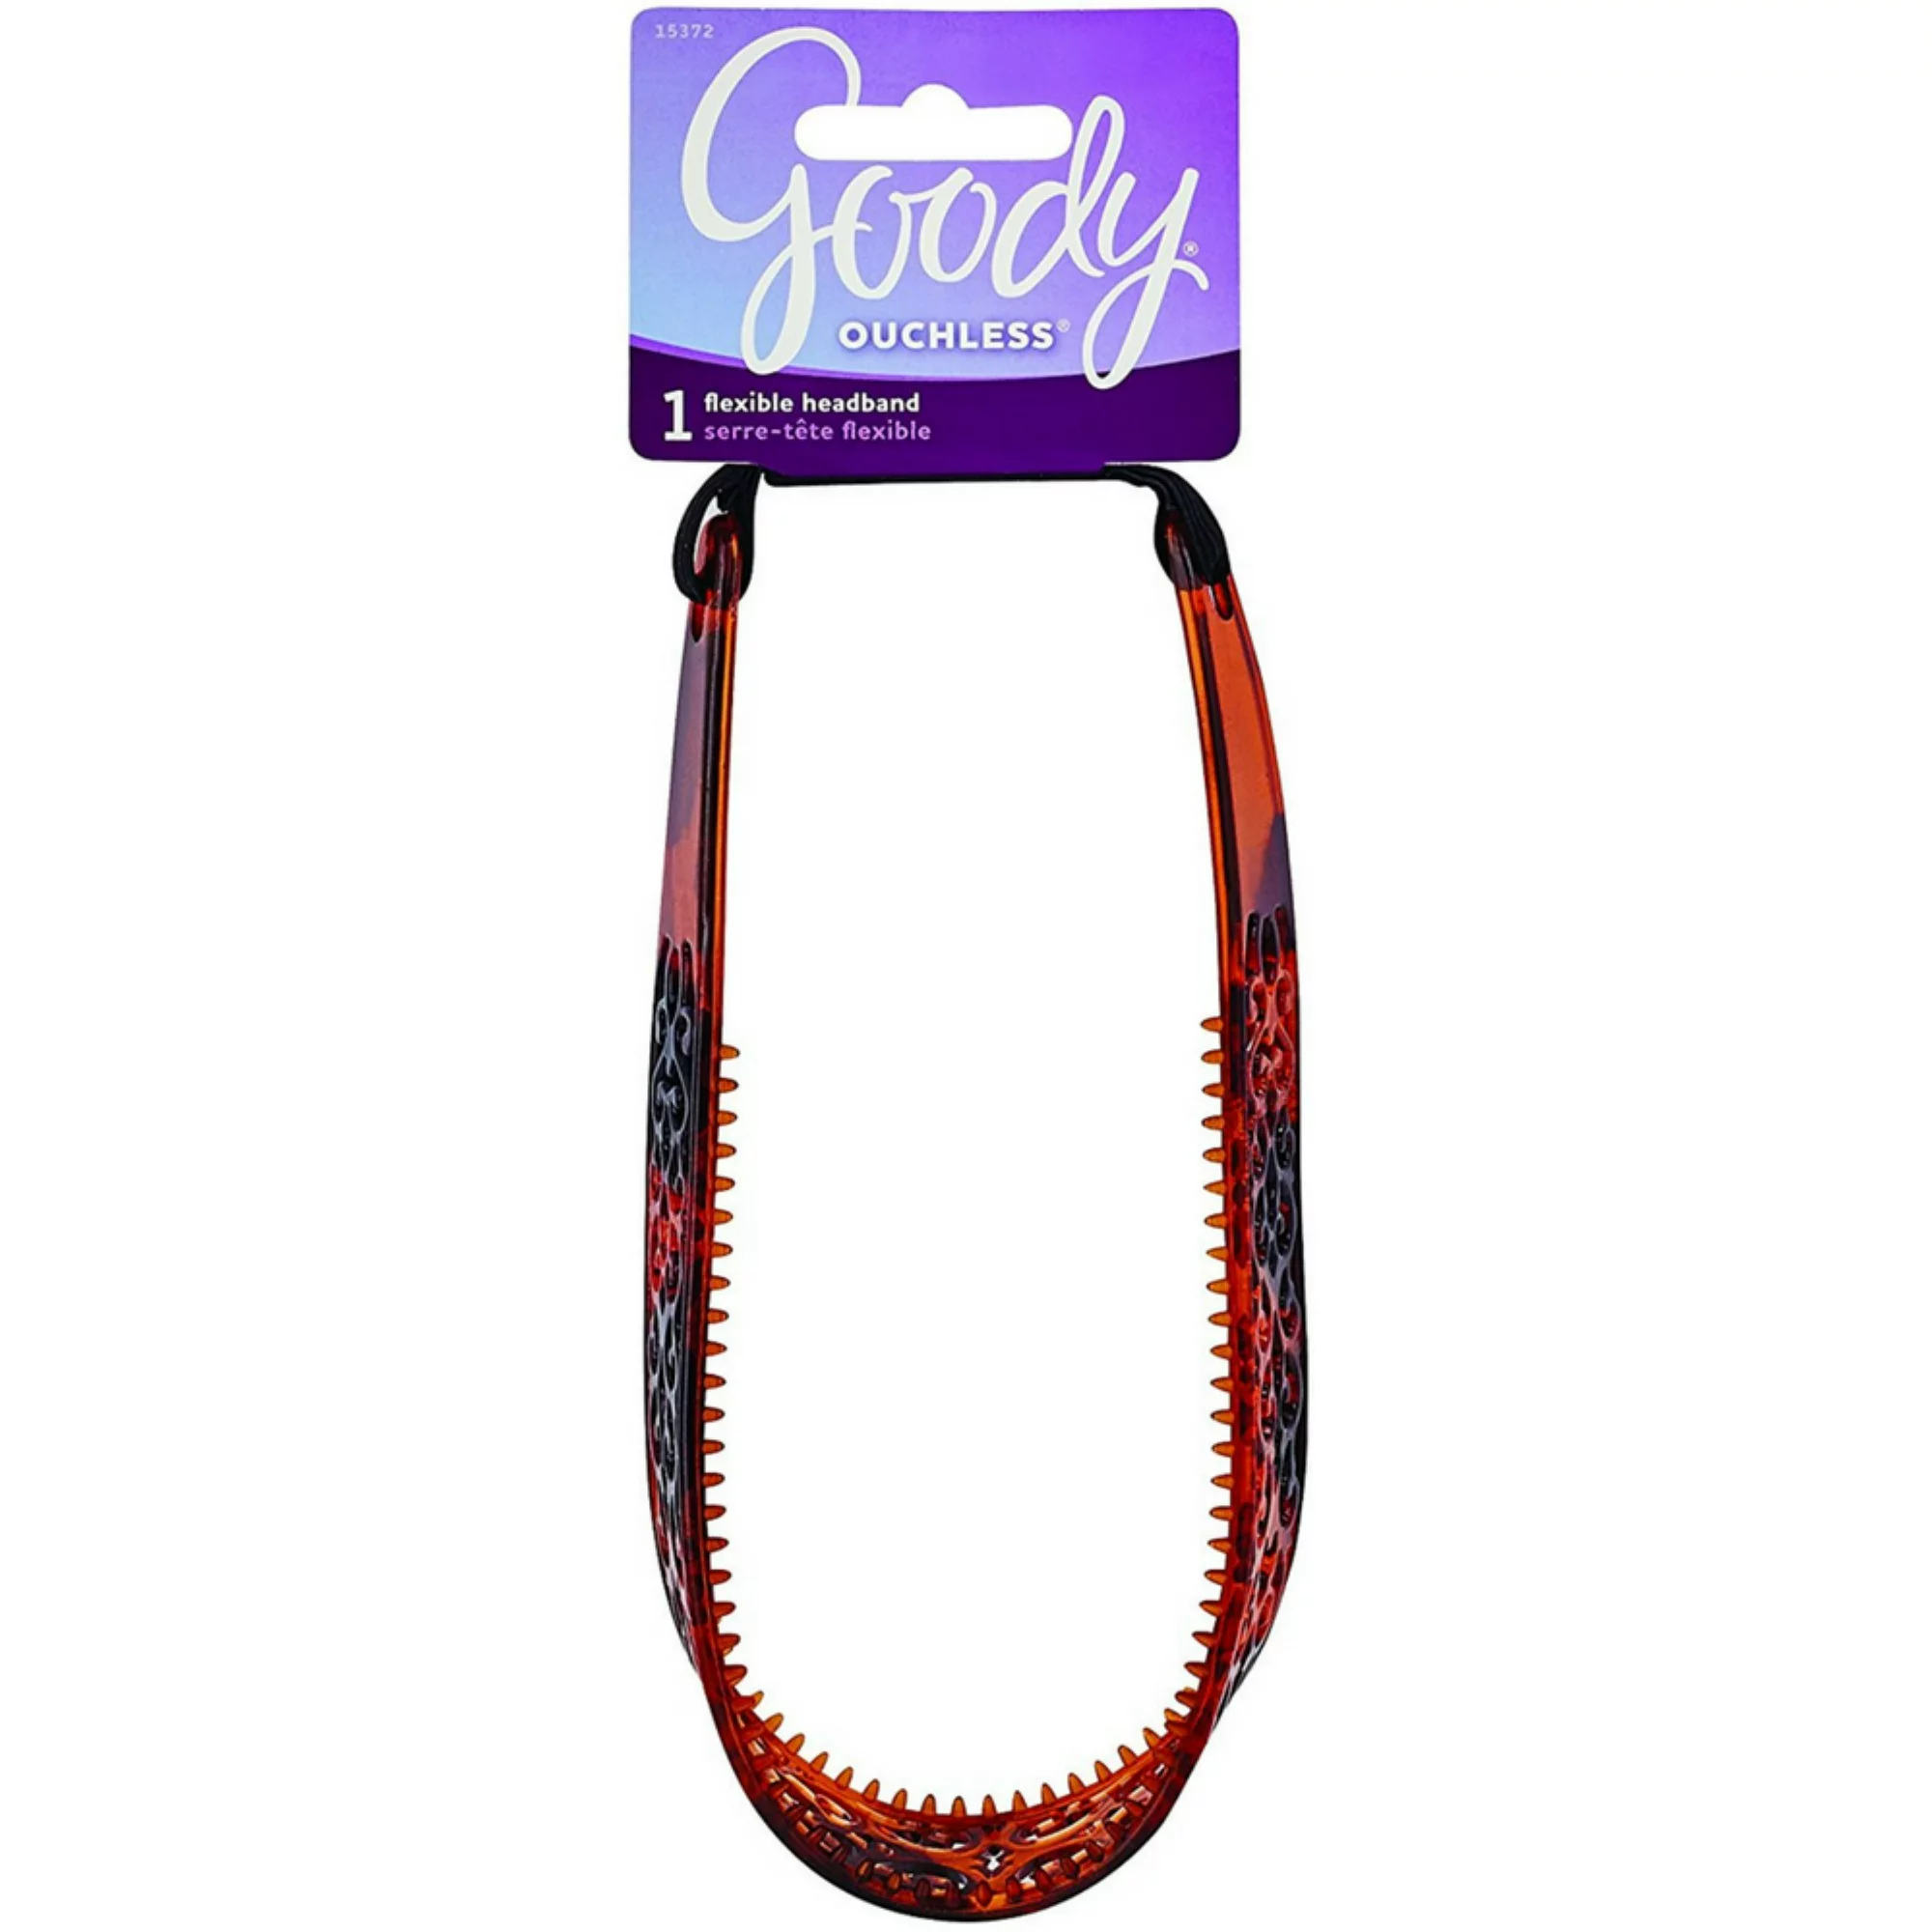 Goody Ouchless Flexible Headband Assort UPC:041457153727 Pack:72/3